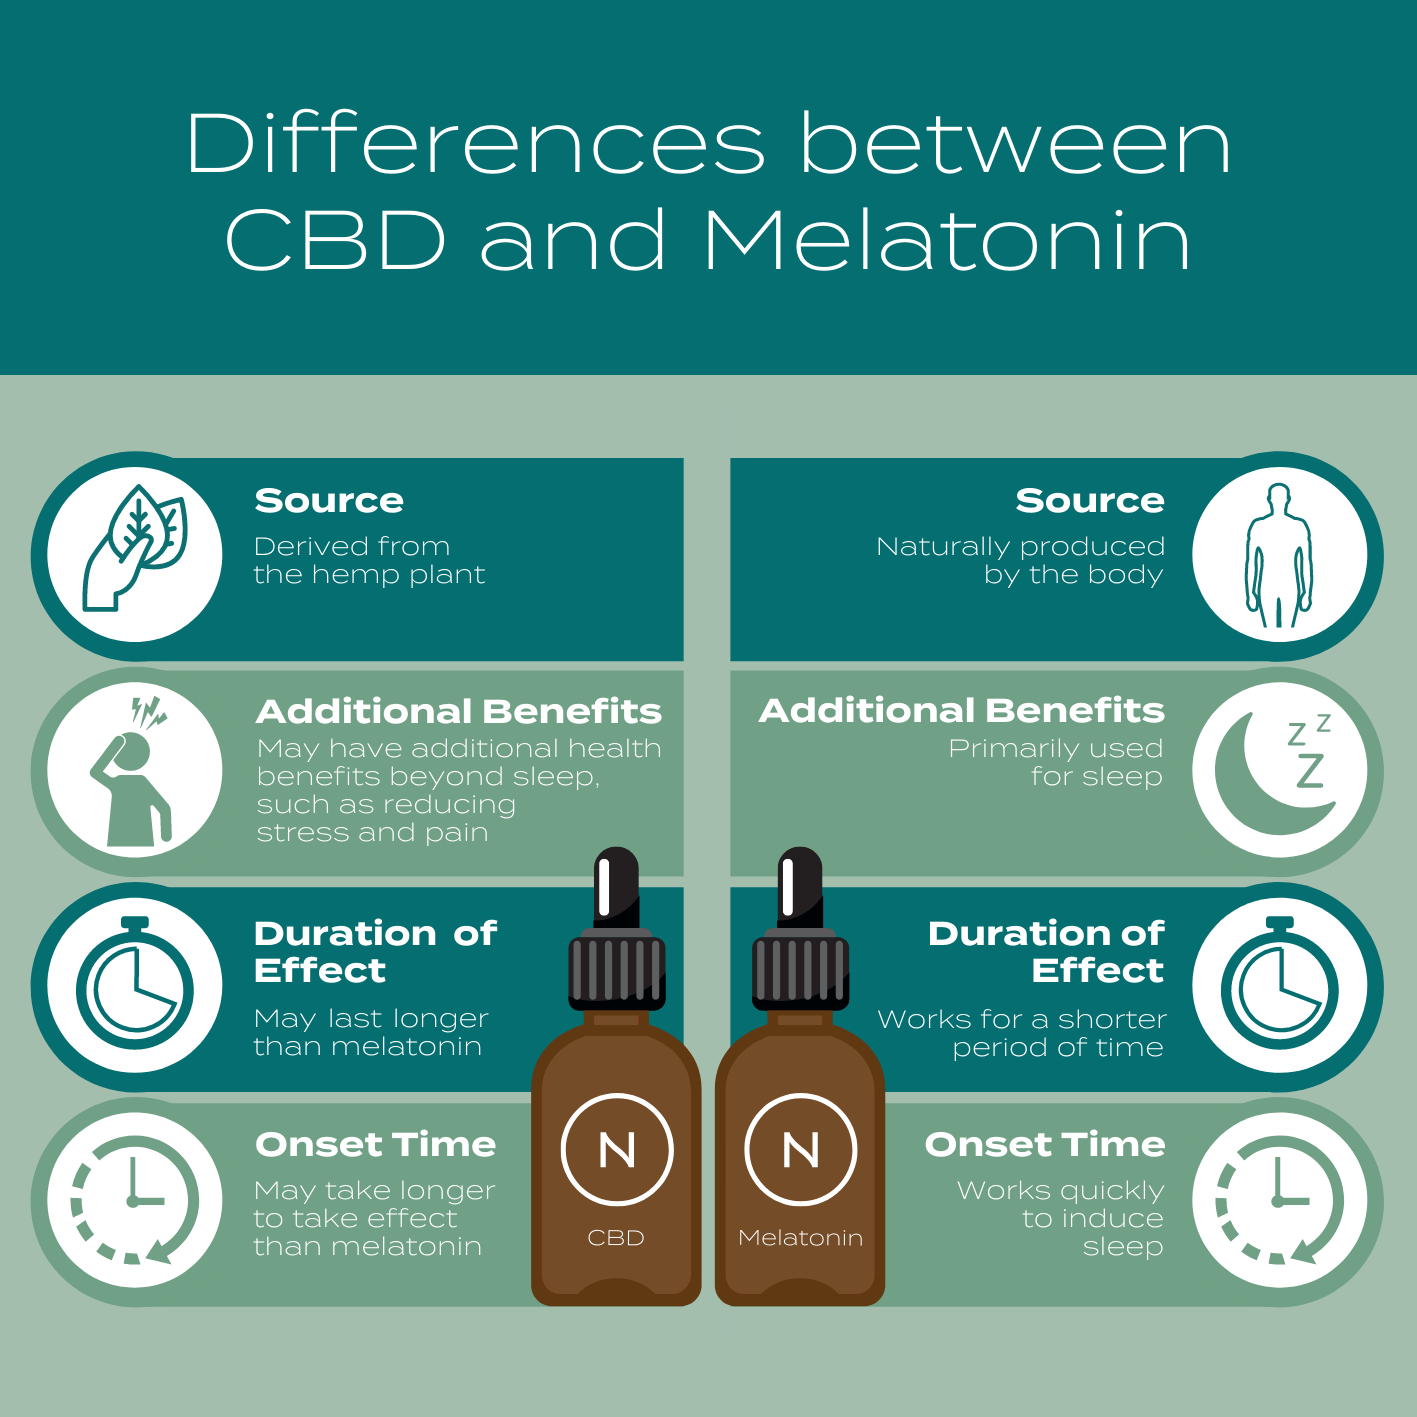 Differences between CBD and Melatonin